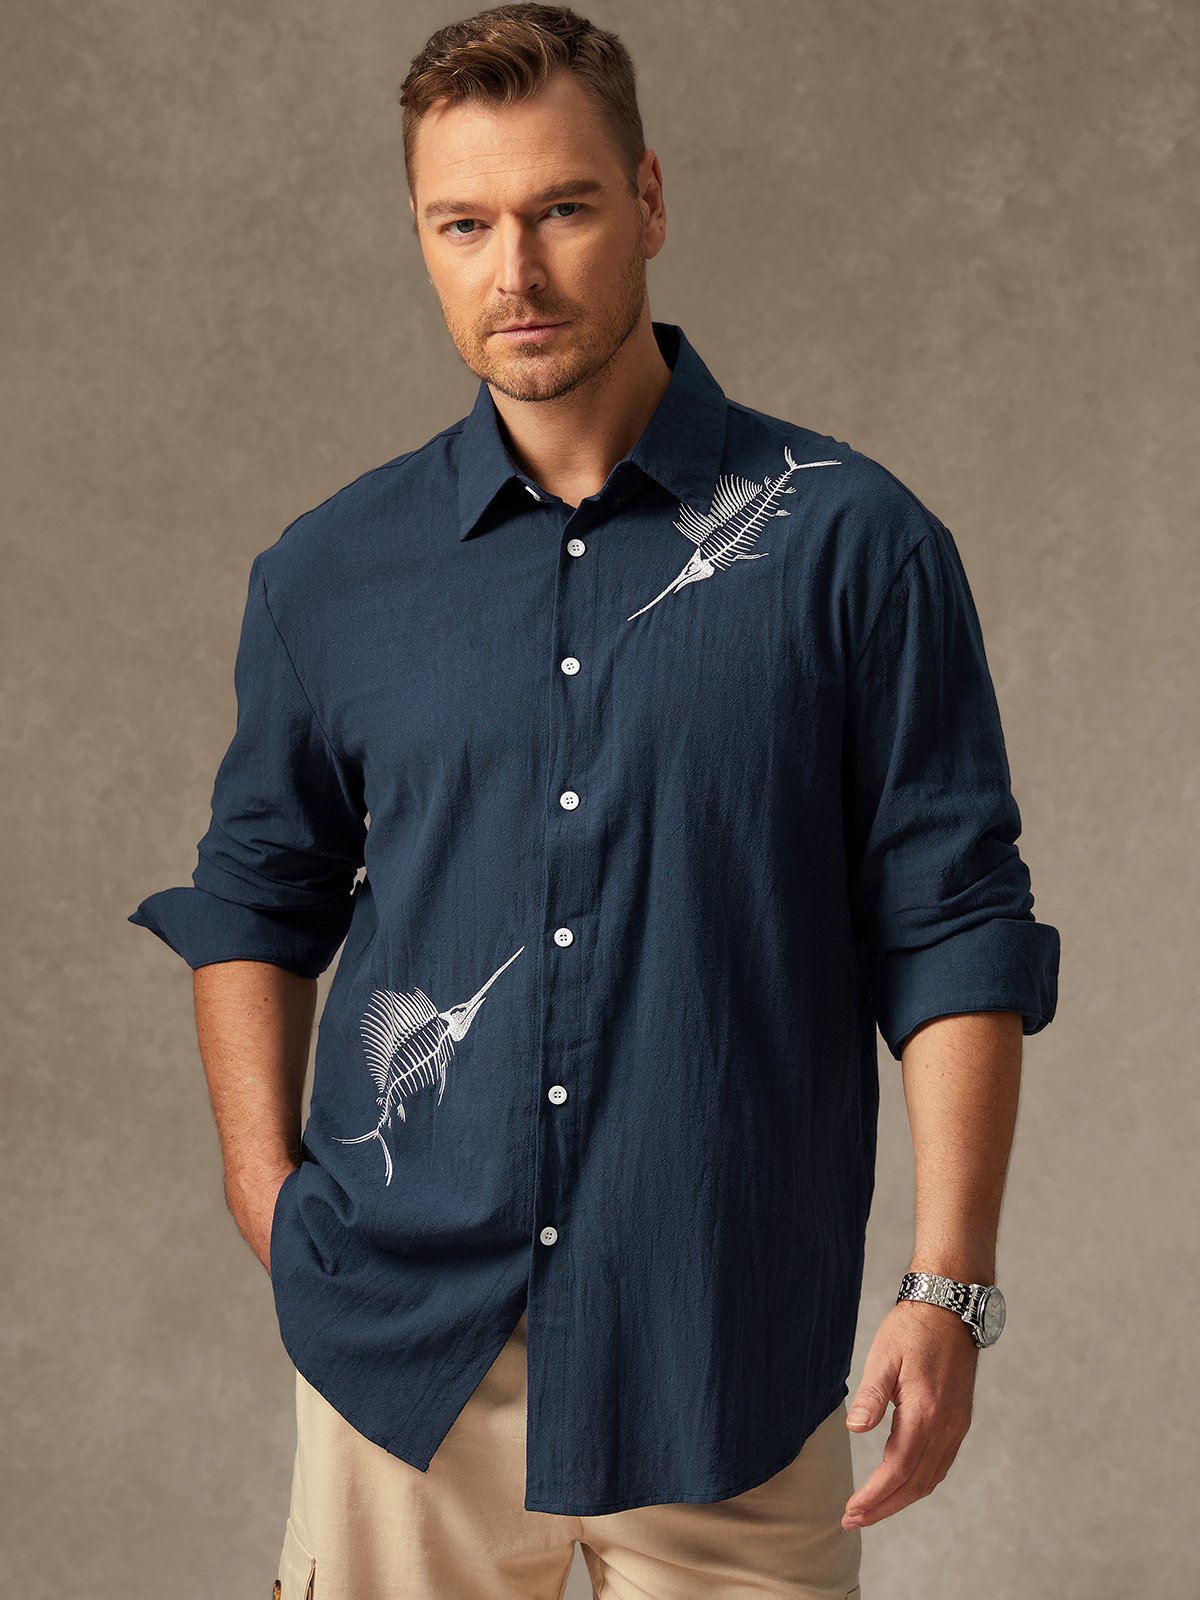 Hardaddy Herringbone Embroidered Long Sleeve Casual Shirt